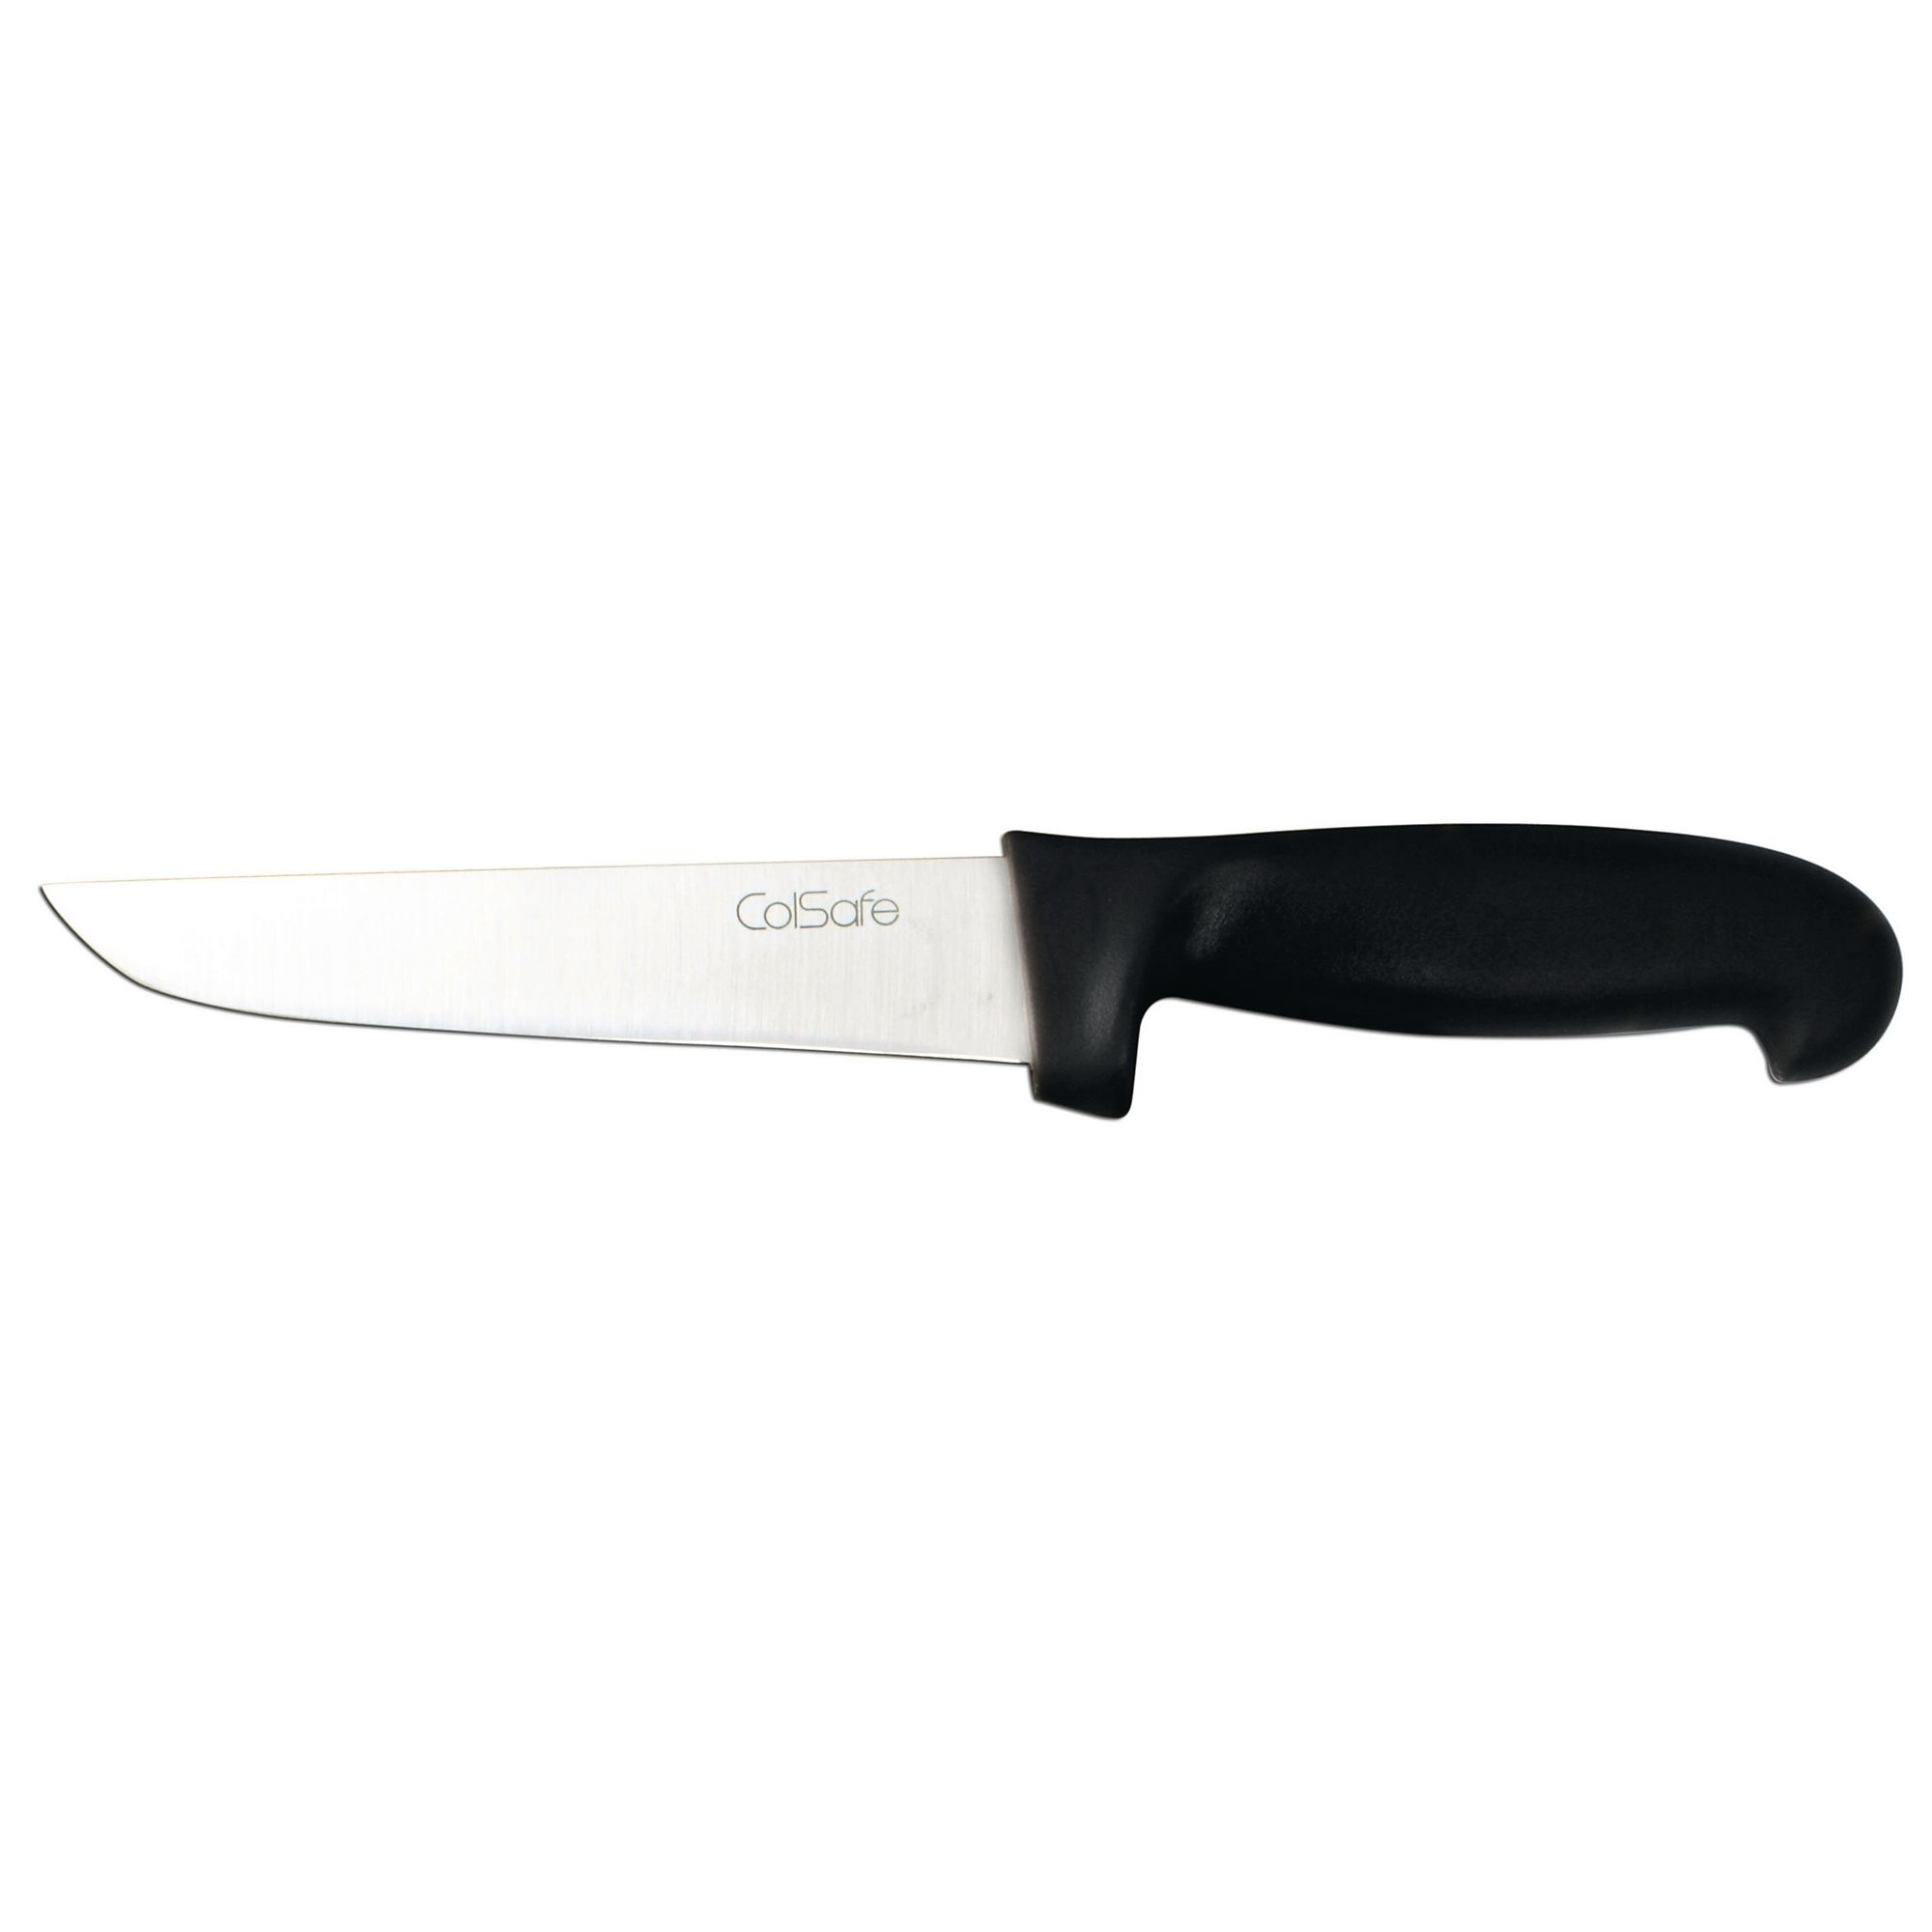 Cook's Knife - 152mm blade